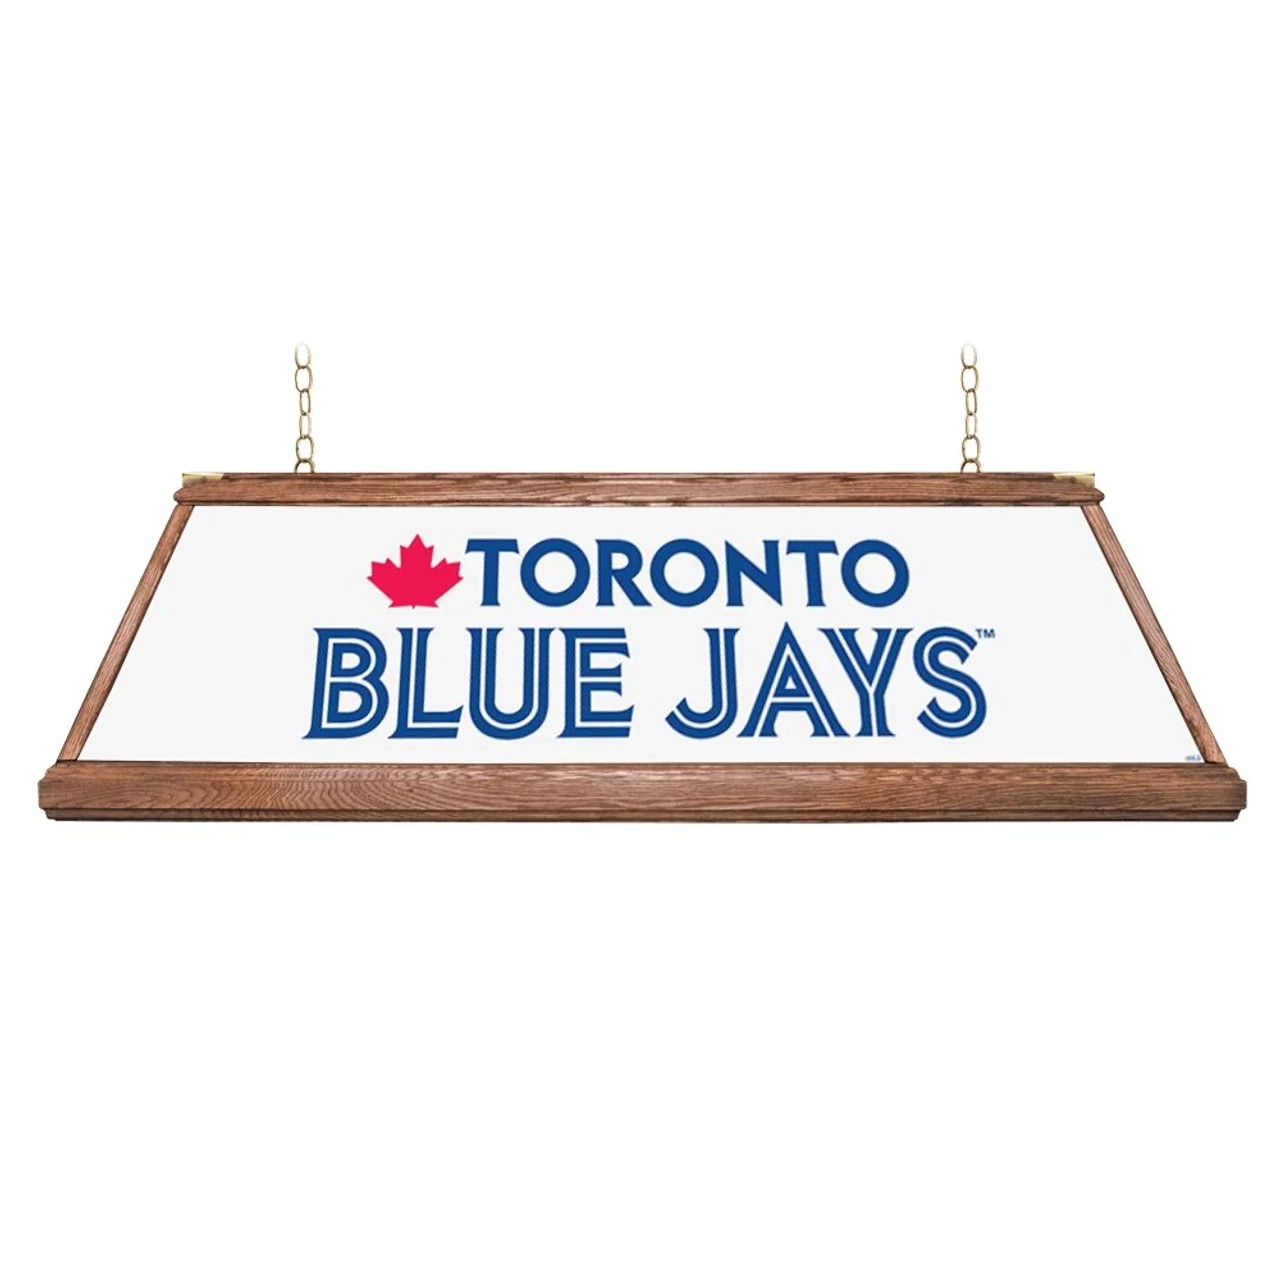 MBBLUE JAYS-330-01A, TOR, Toronto Blue, Jays, Premium, Wood, Billiard, Pool, Table, Light, Lamp, MLB, The Fan-Brand, "A" Version, 704384966630